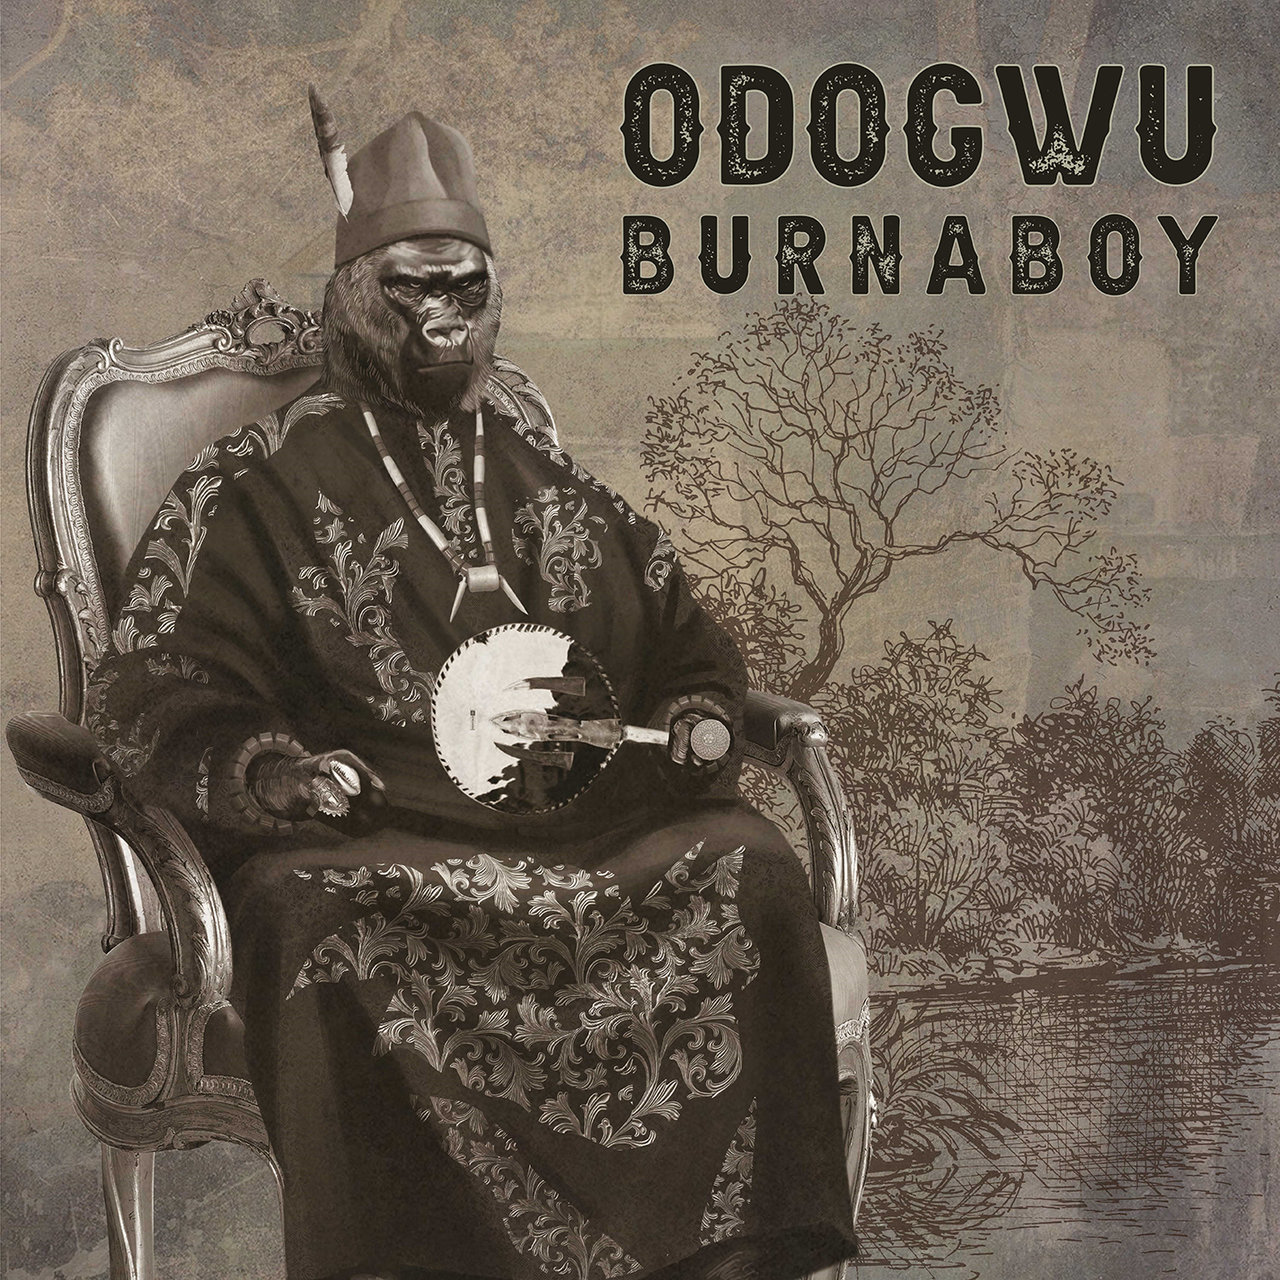 Burna Boy - Odogwu (Cover)